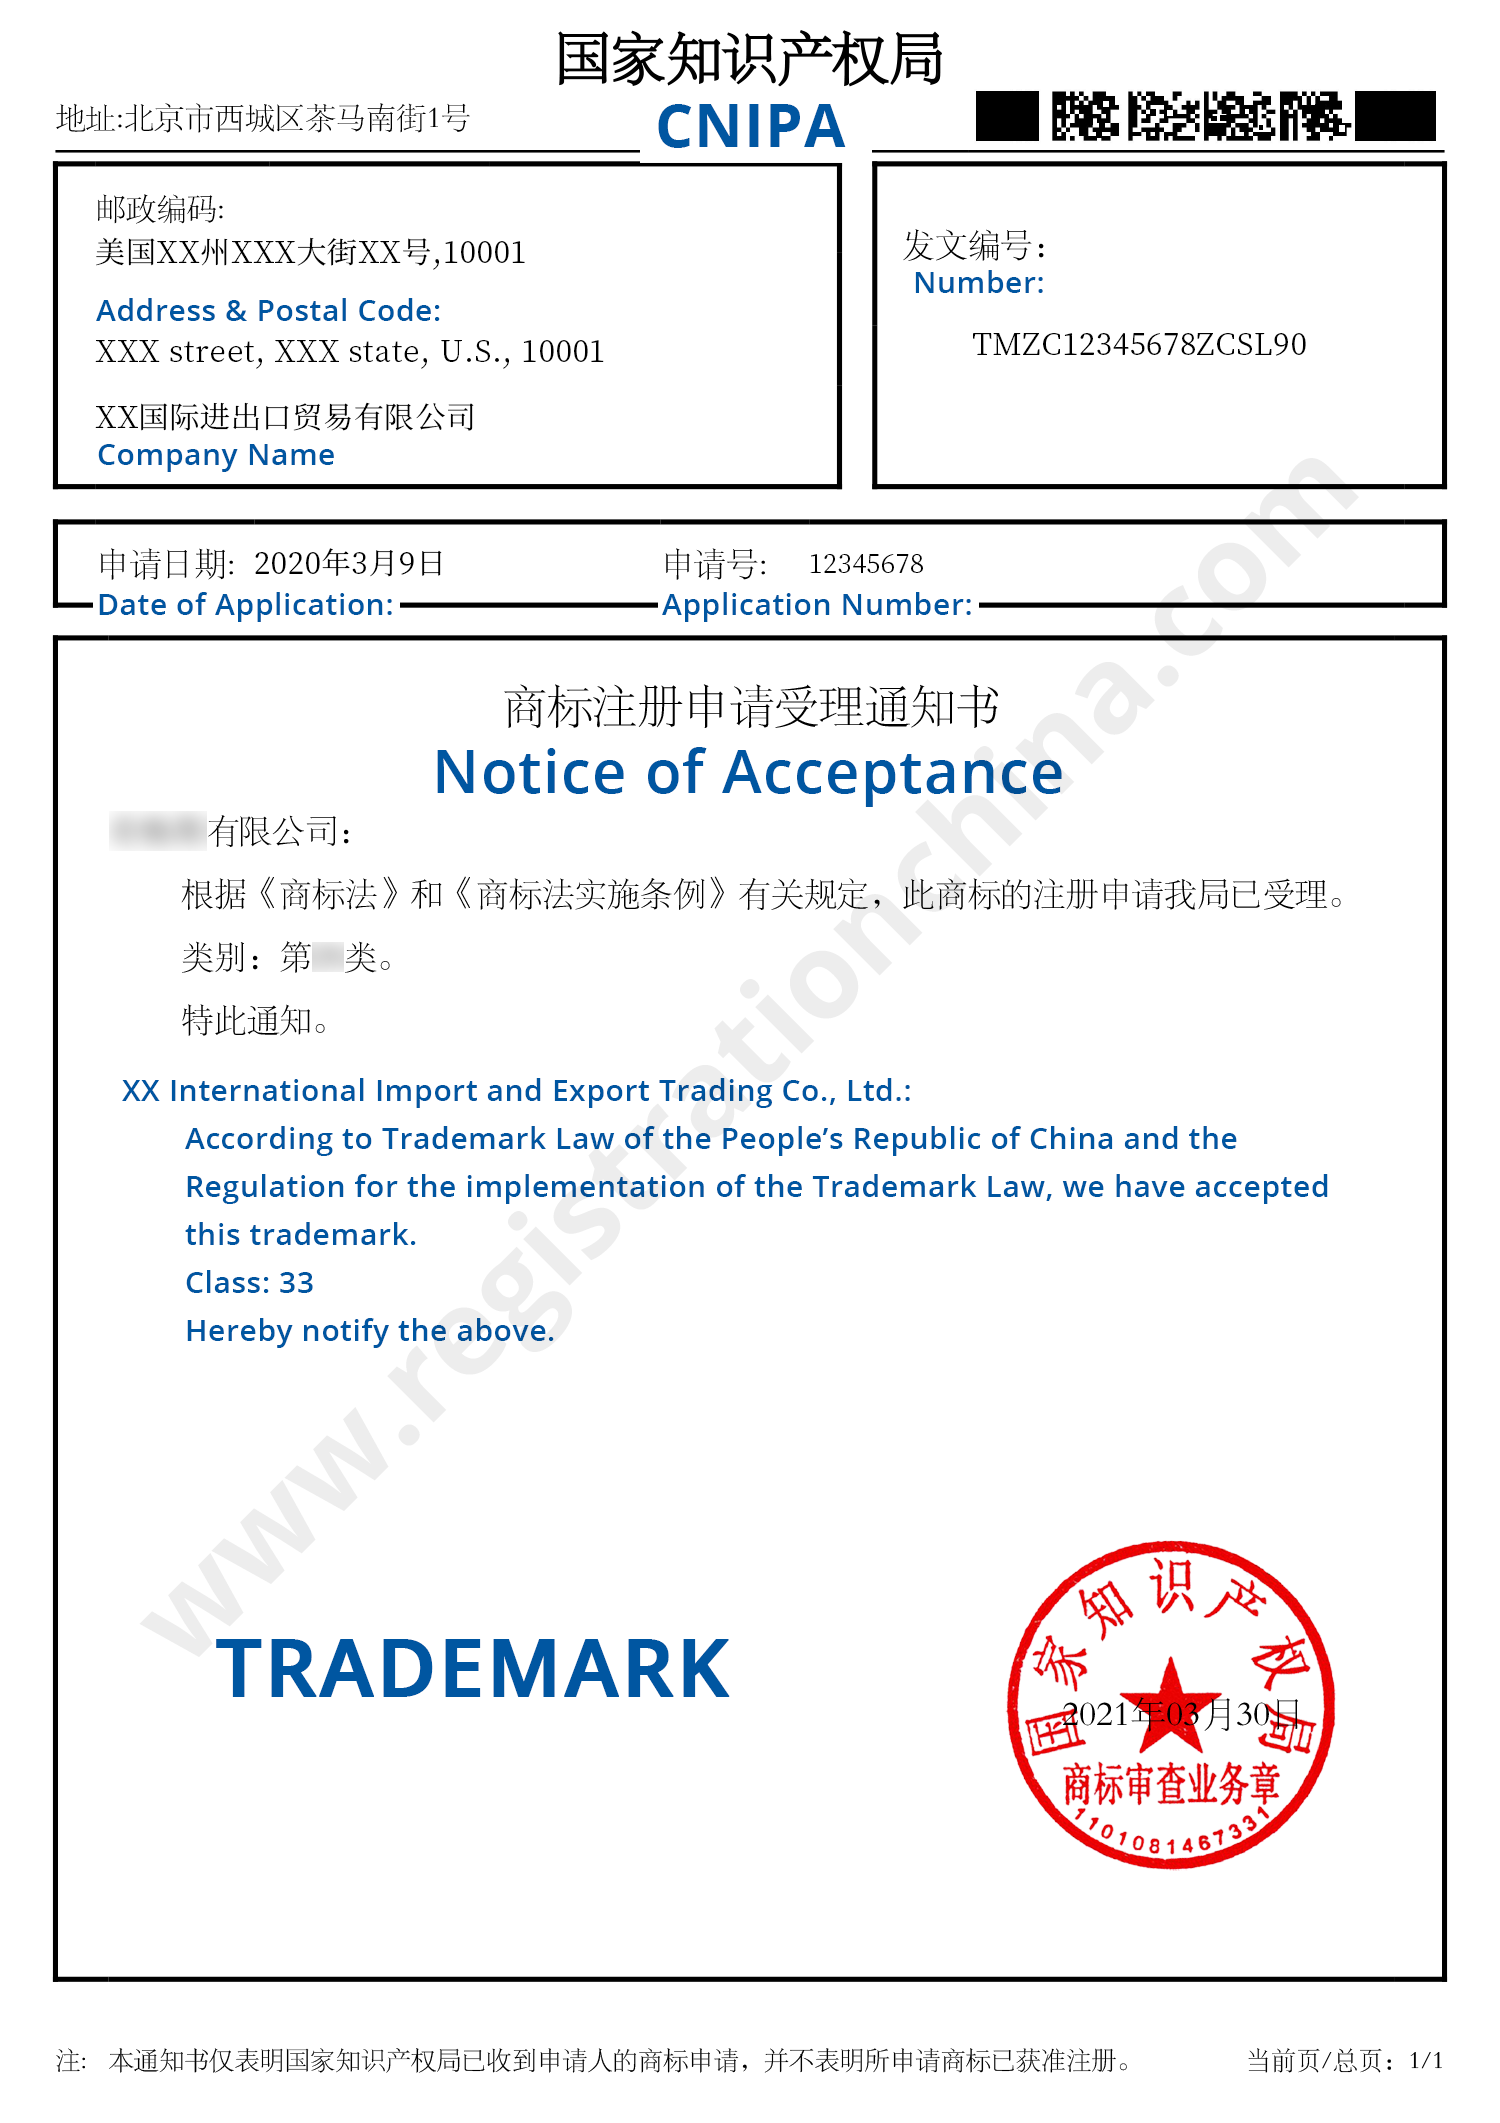 Trademark Notice of Acceptance